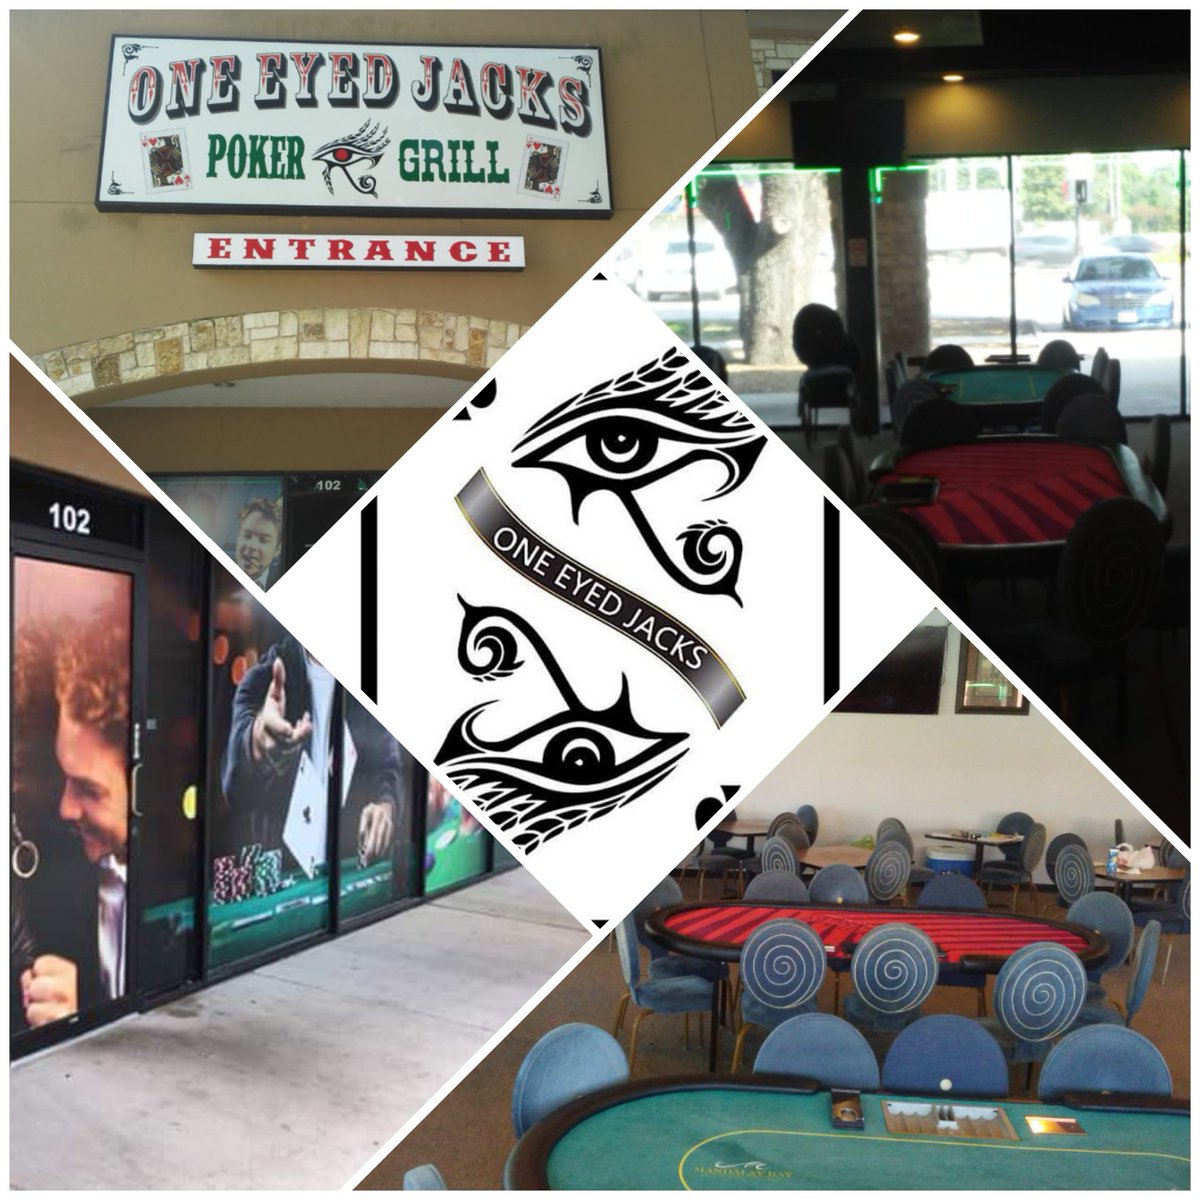 Sarasota kennel club & one eyed jacks poker